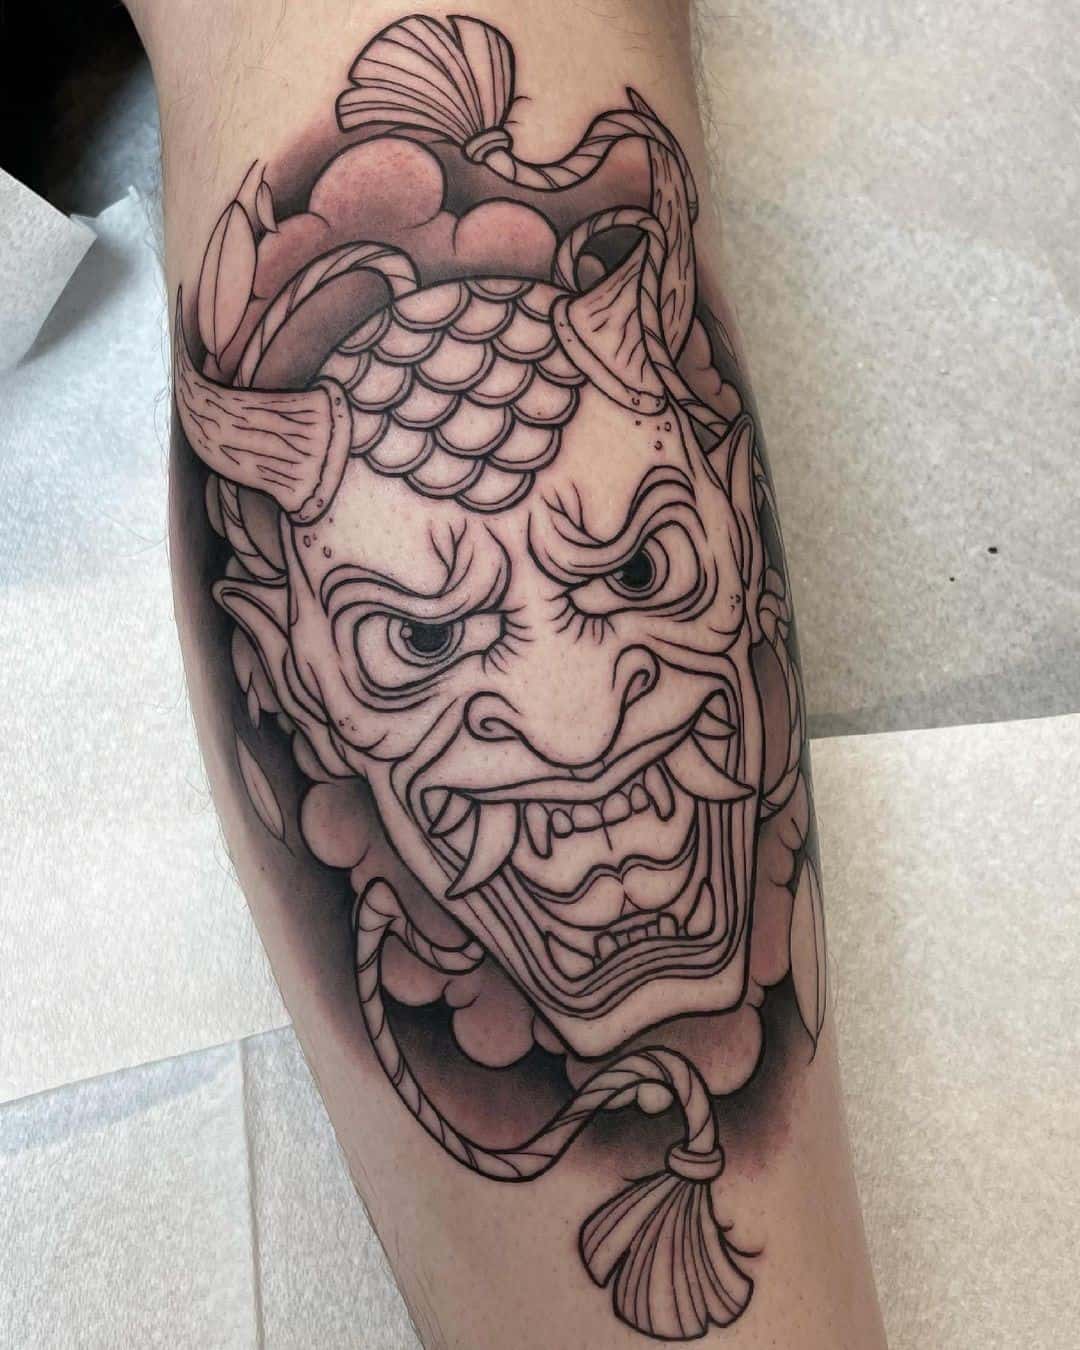 Detailed Oni Mask Tattoo Over Leg